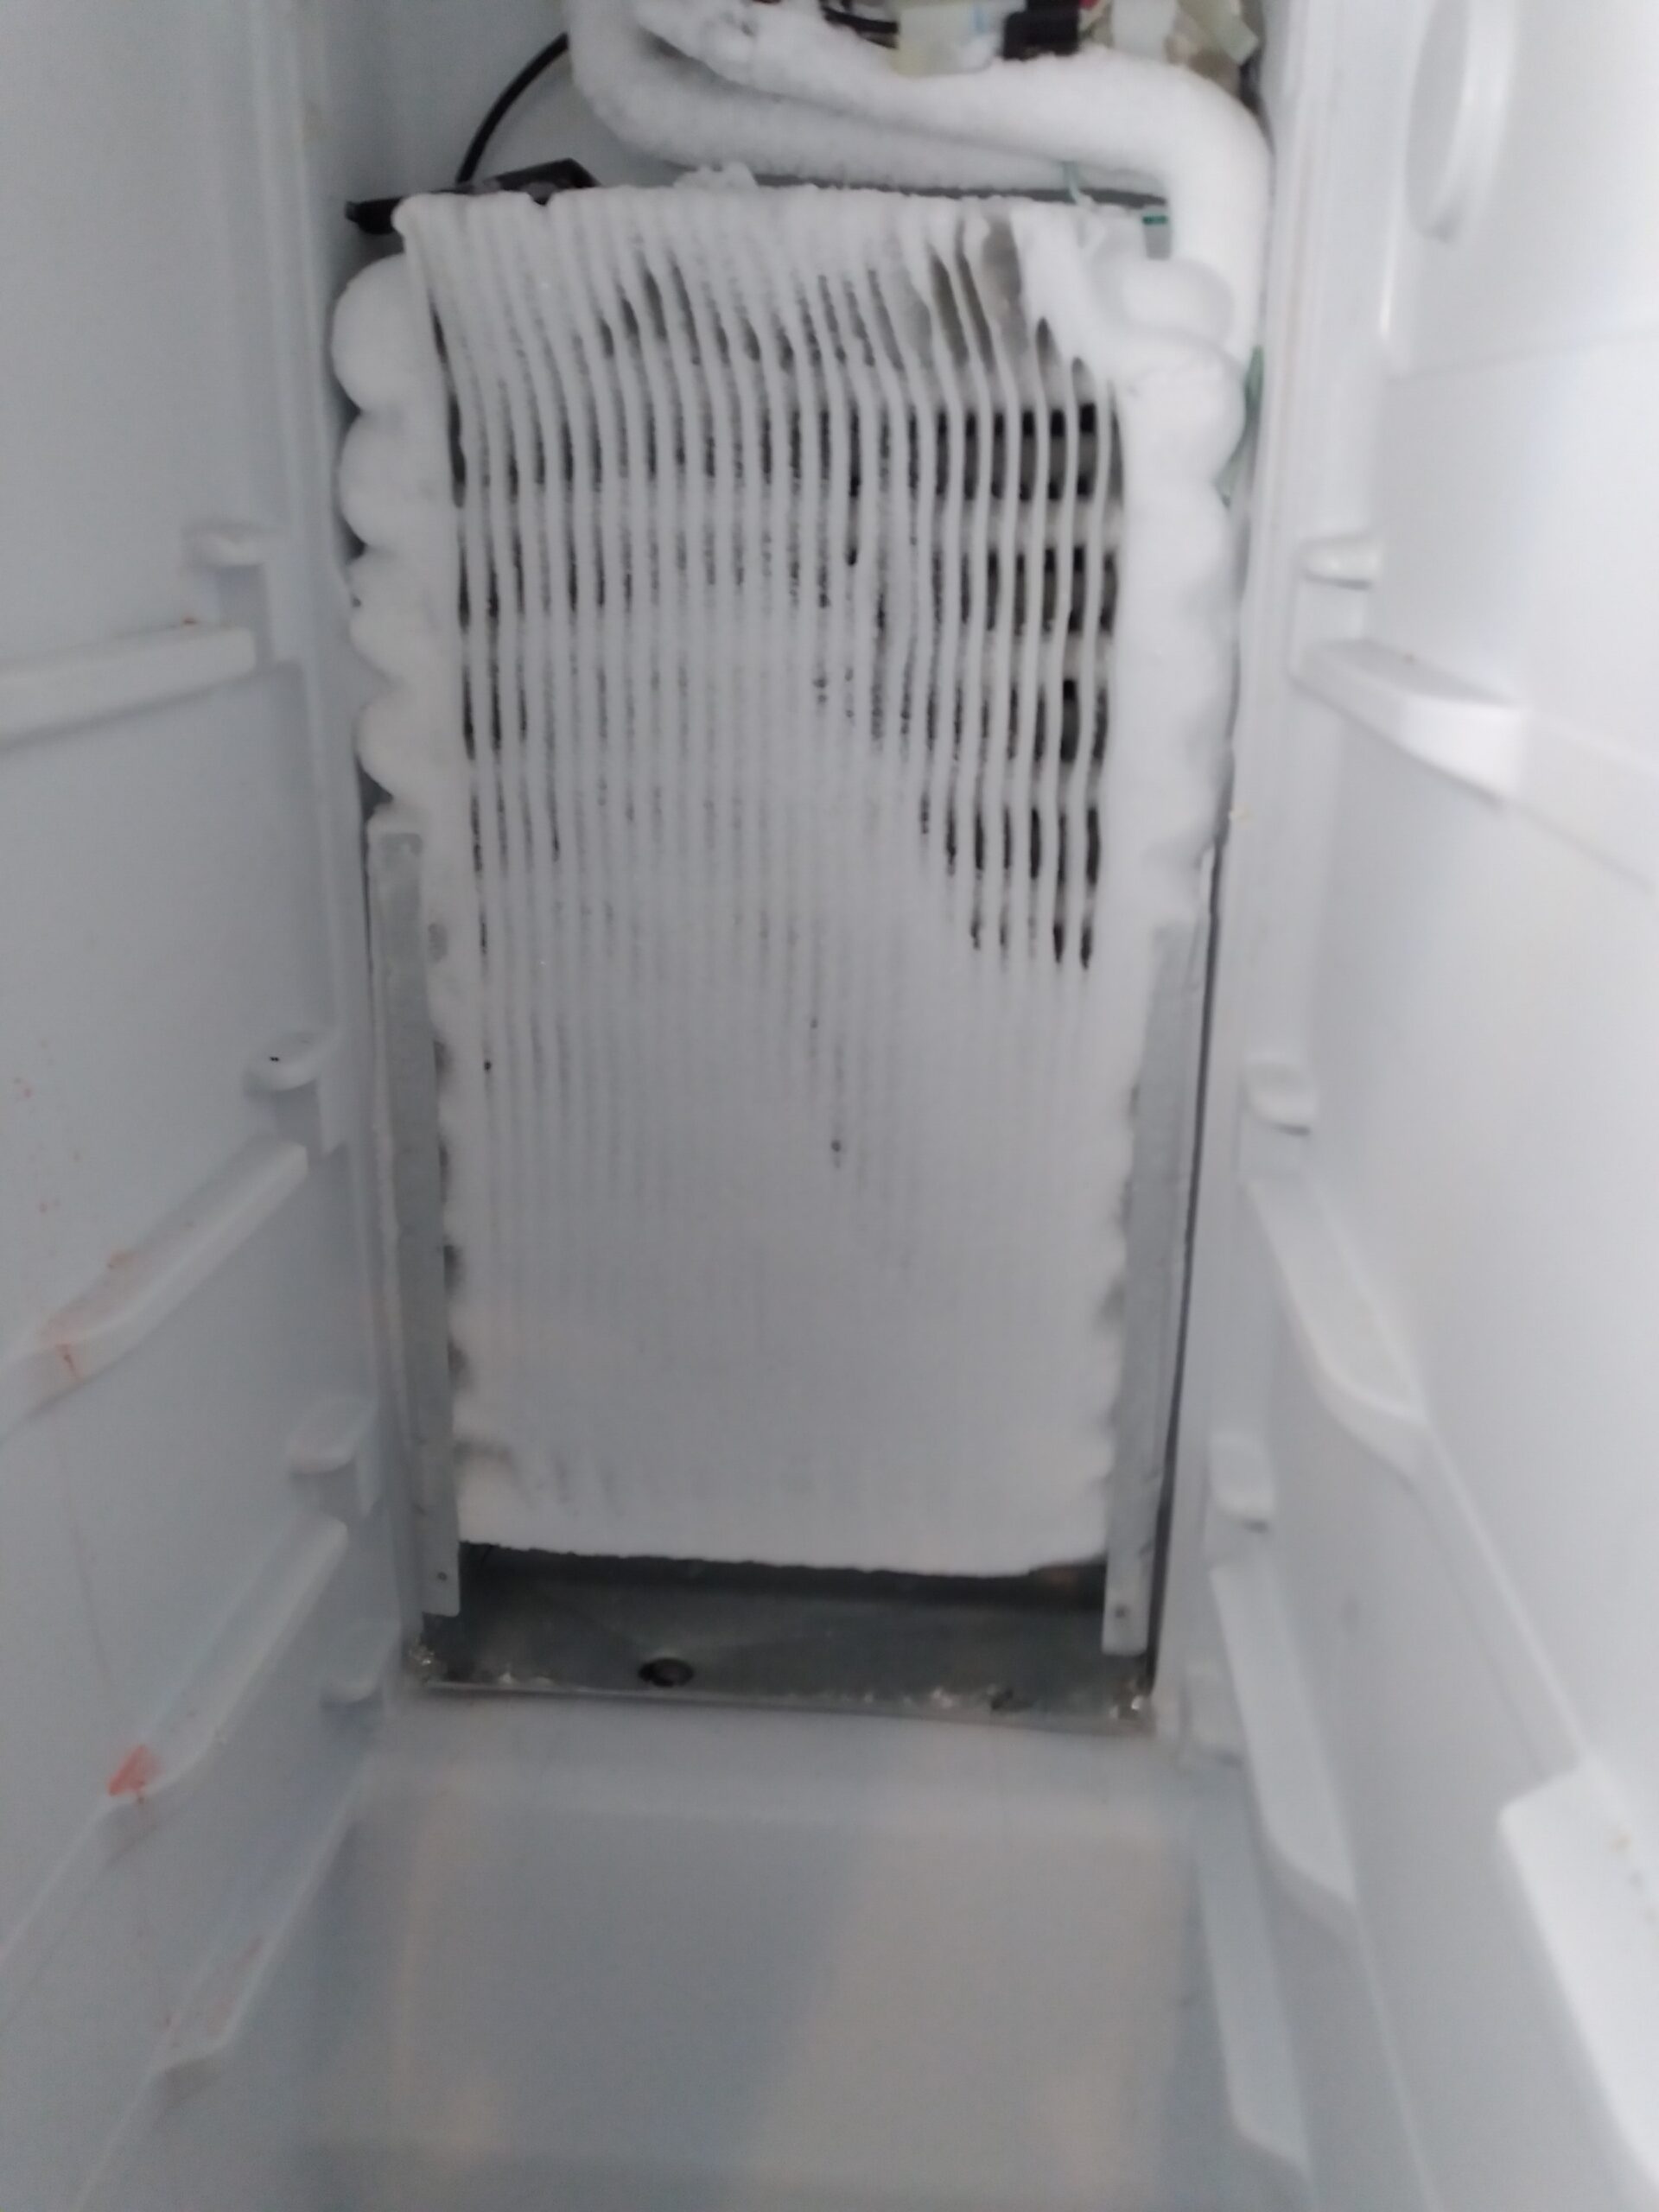 appliance repair refrigerator not defrosting nittany ln lake hart orlando fl 32832